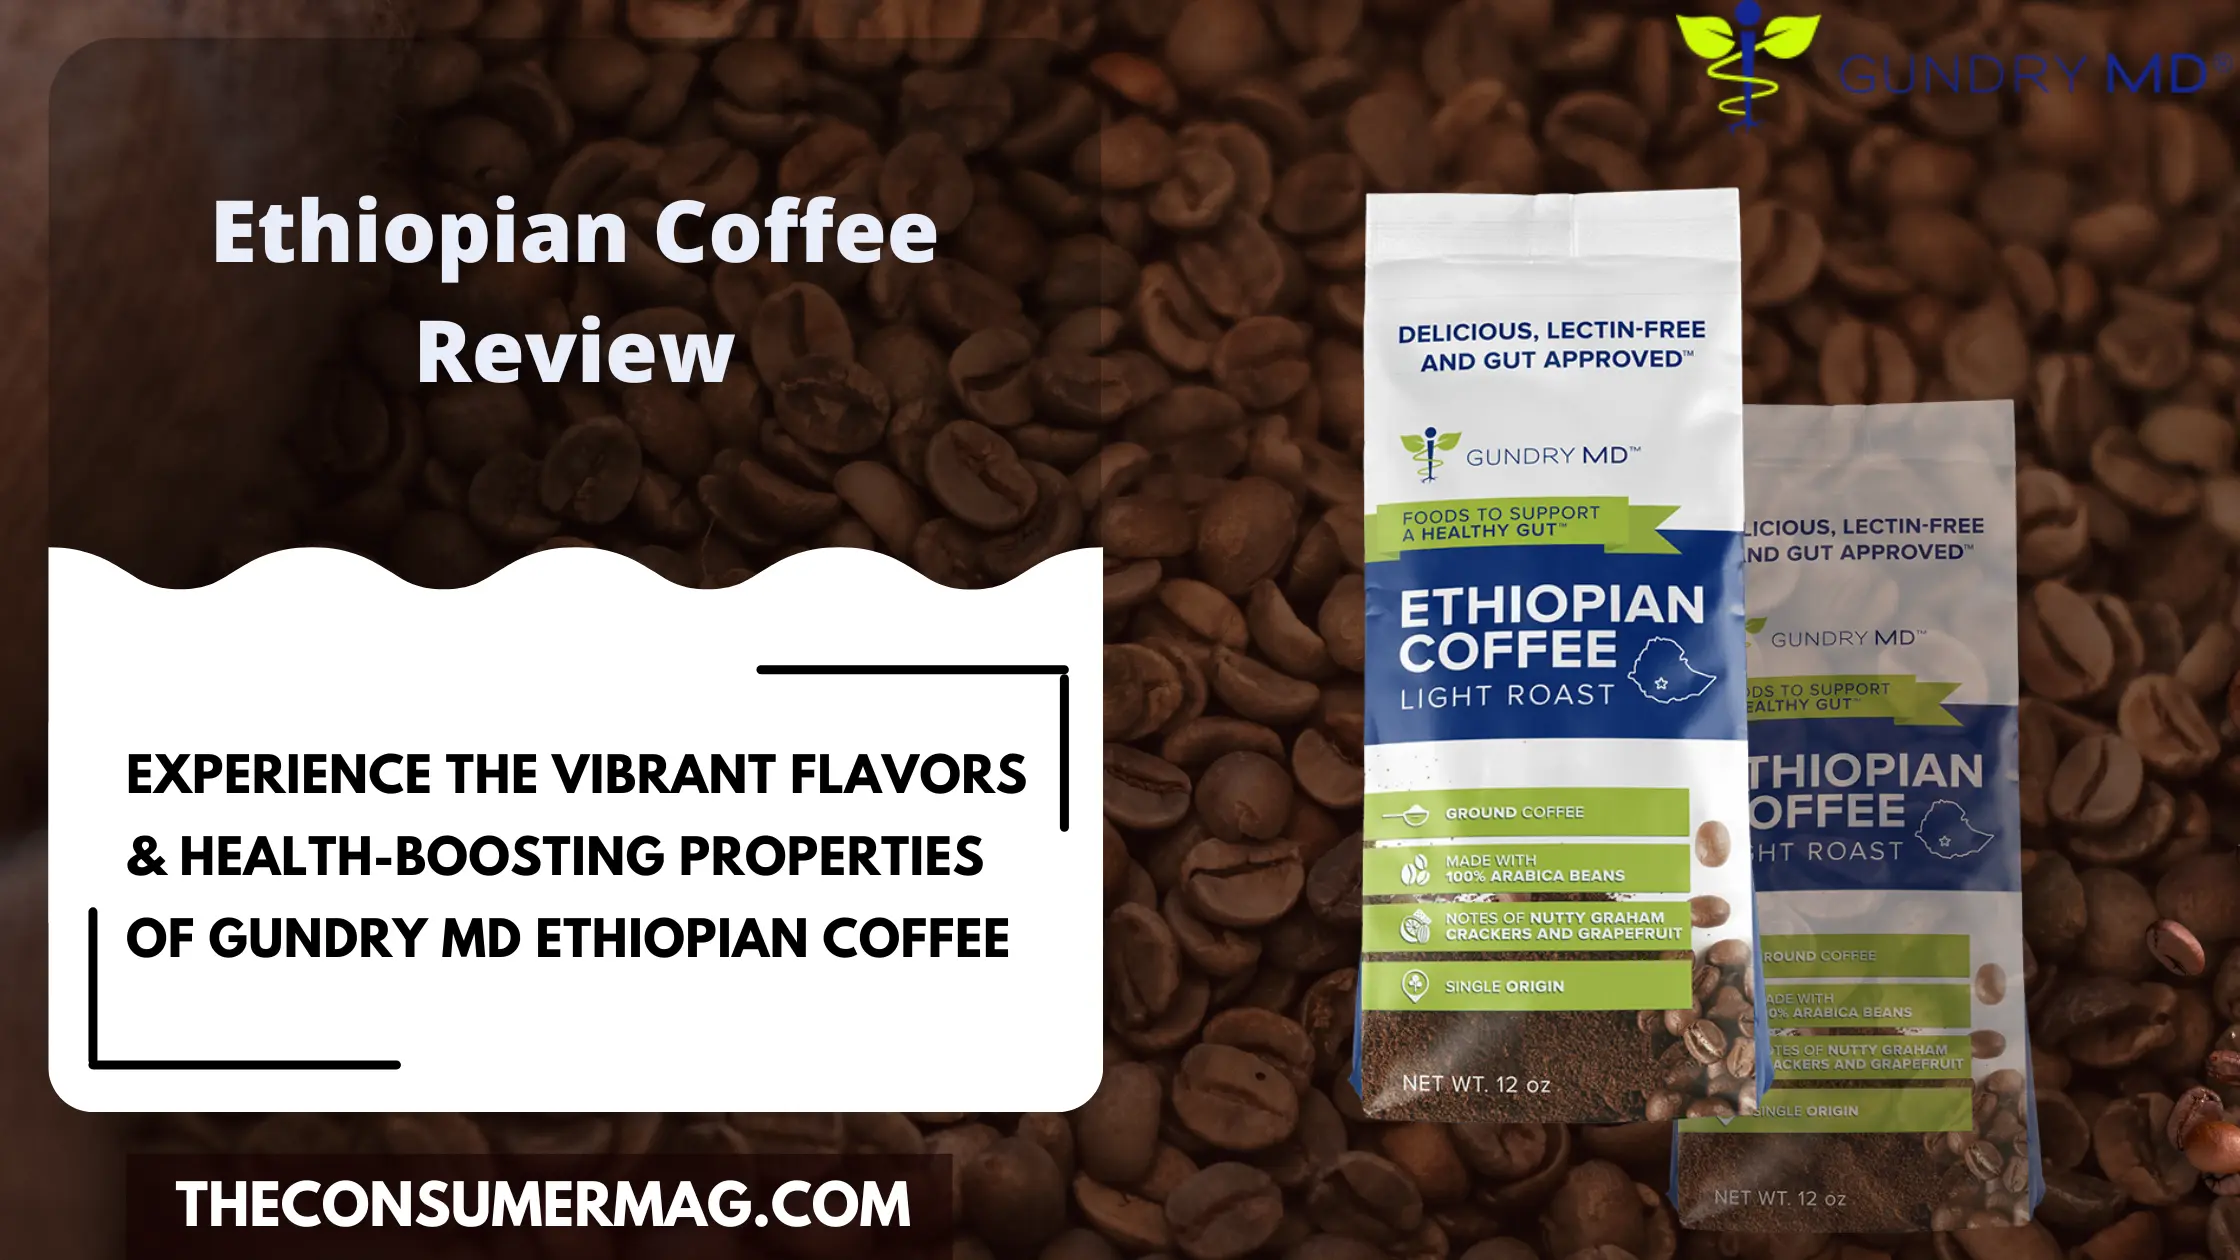 Ethiopian Coffee Featured Image